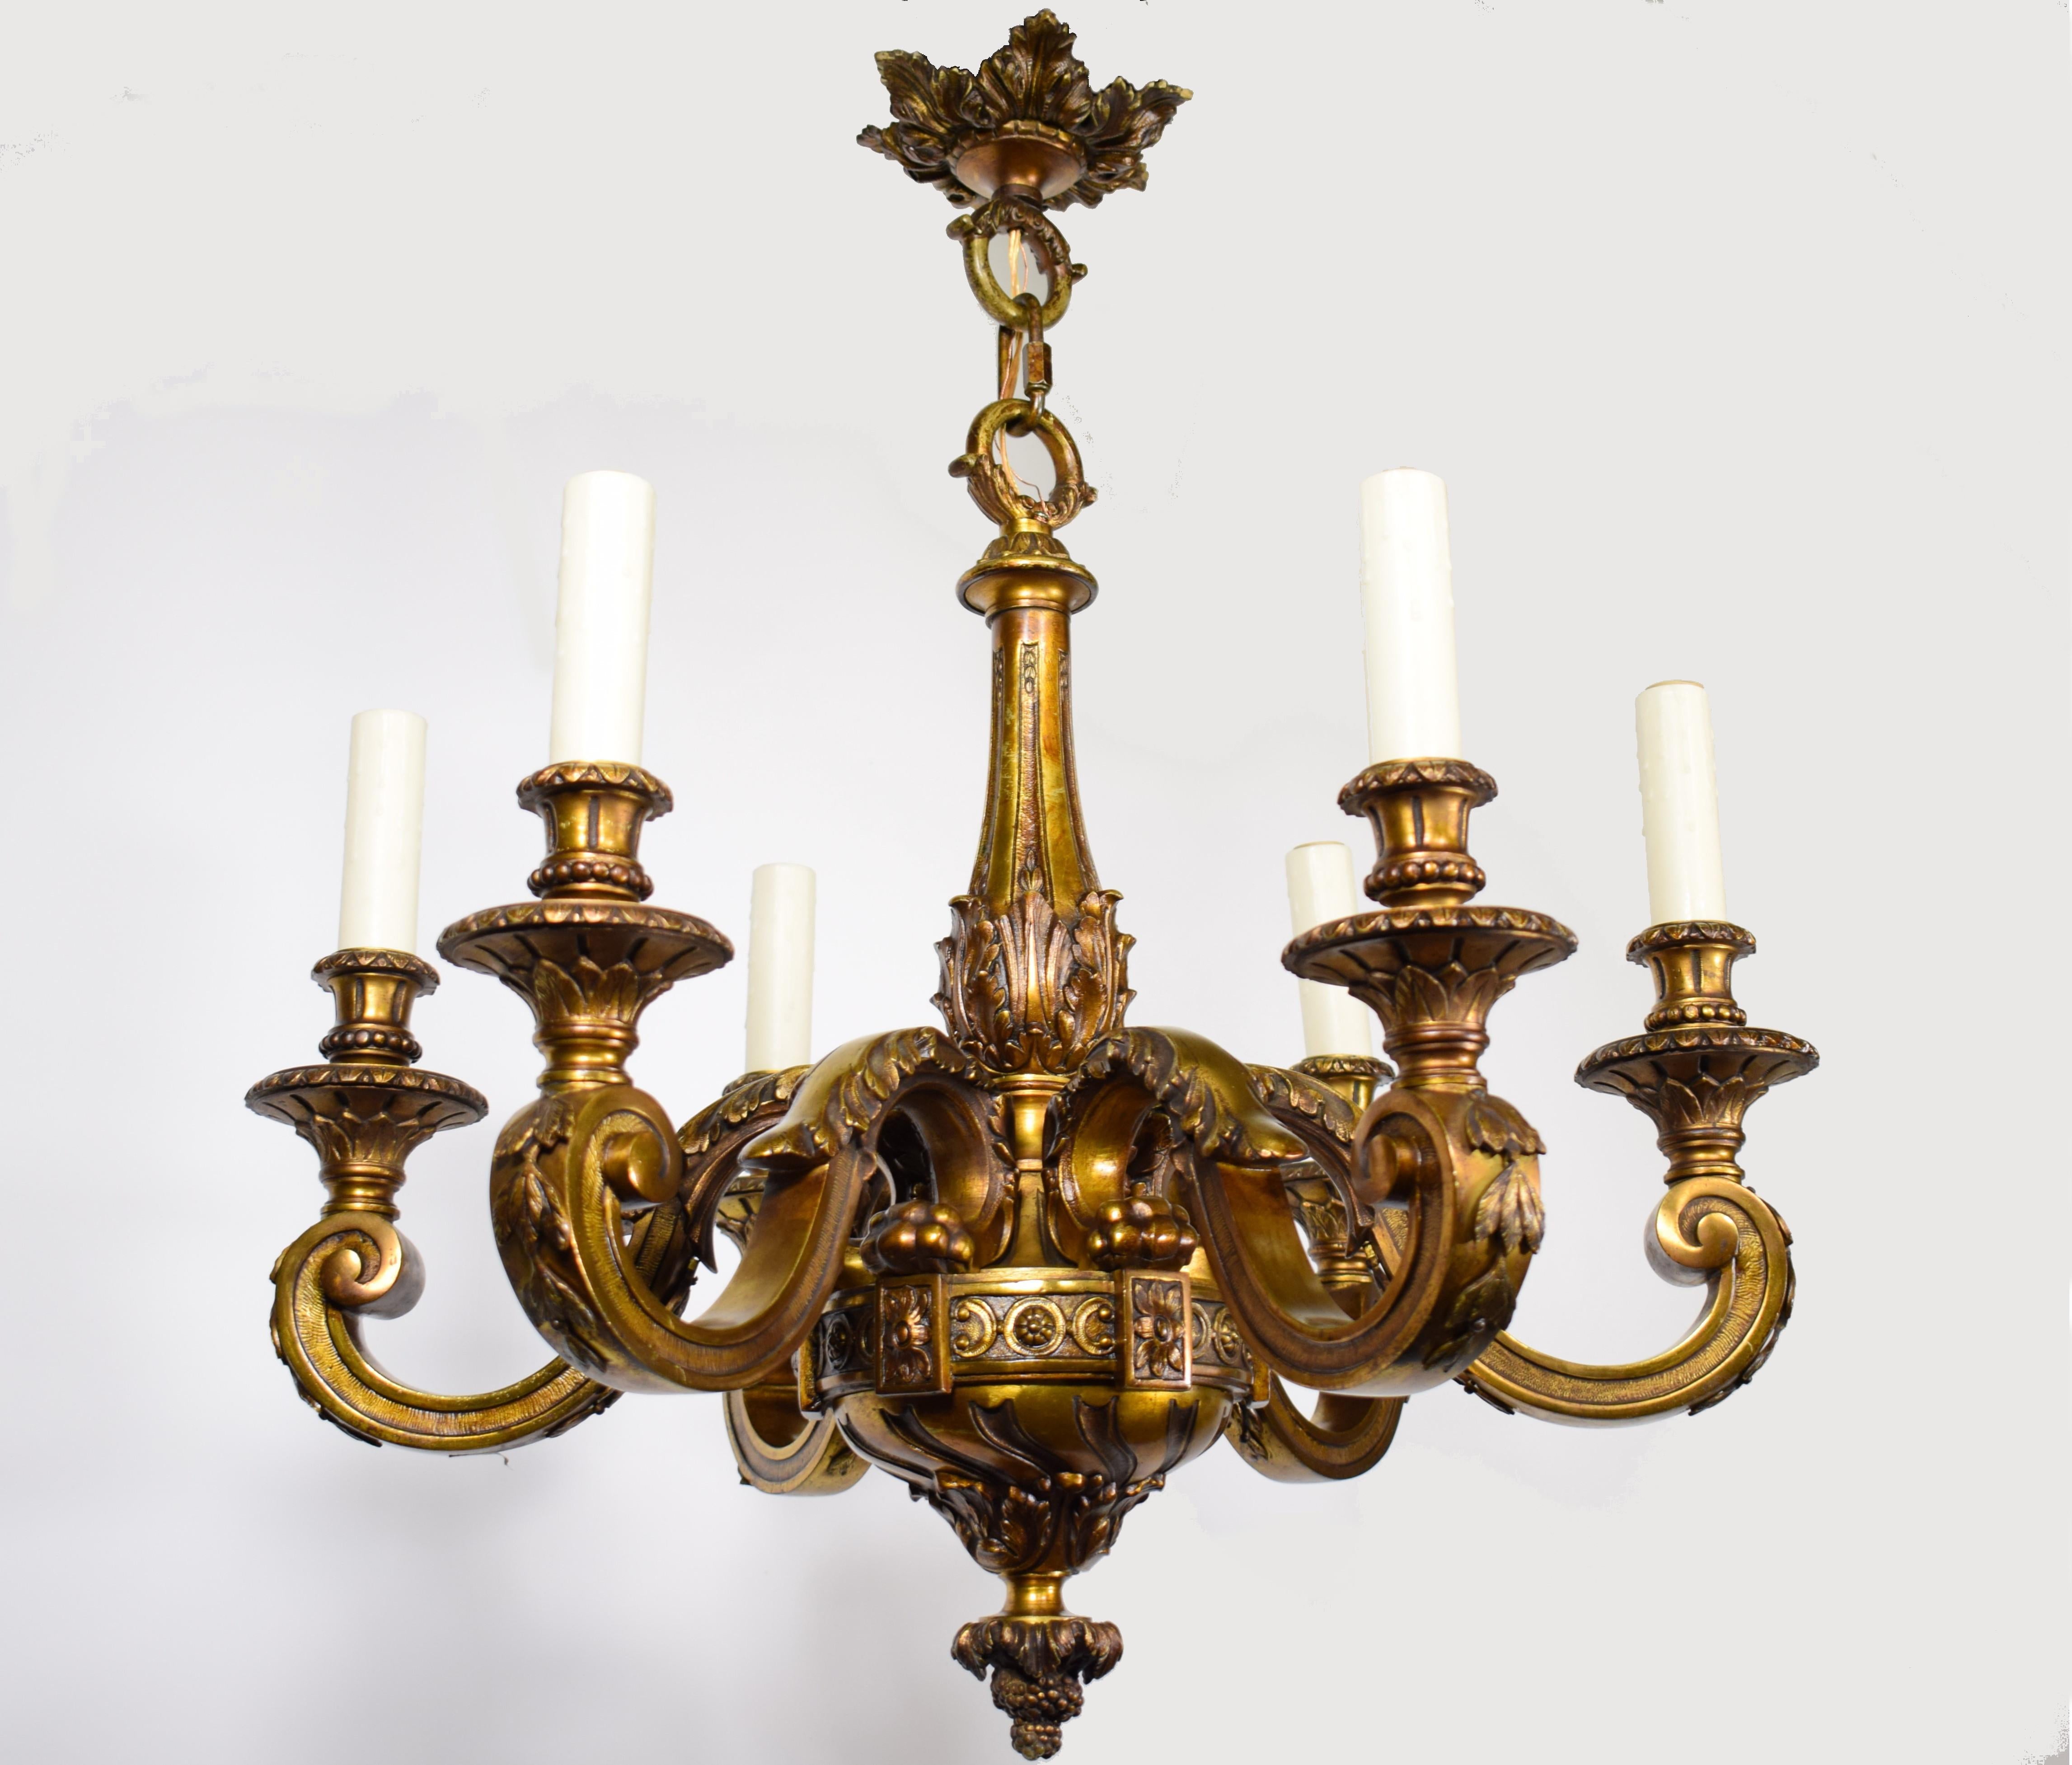 A fine and elegant gilt bronze Regence style chandelier, France, circa 1900.

Dimensions:
H 26.5